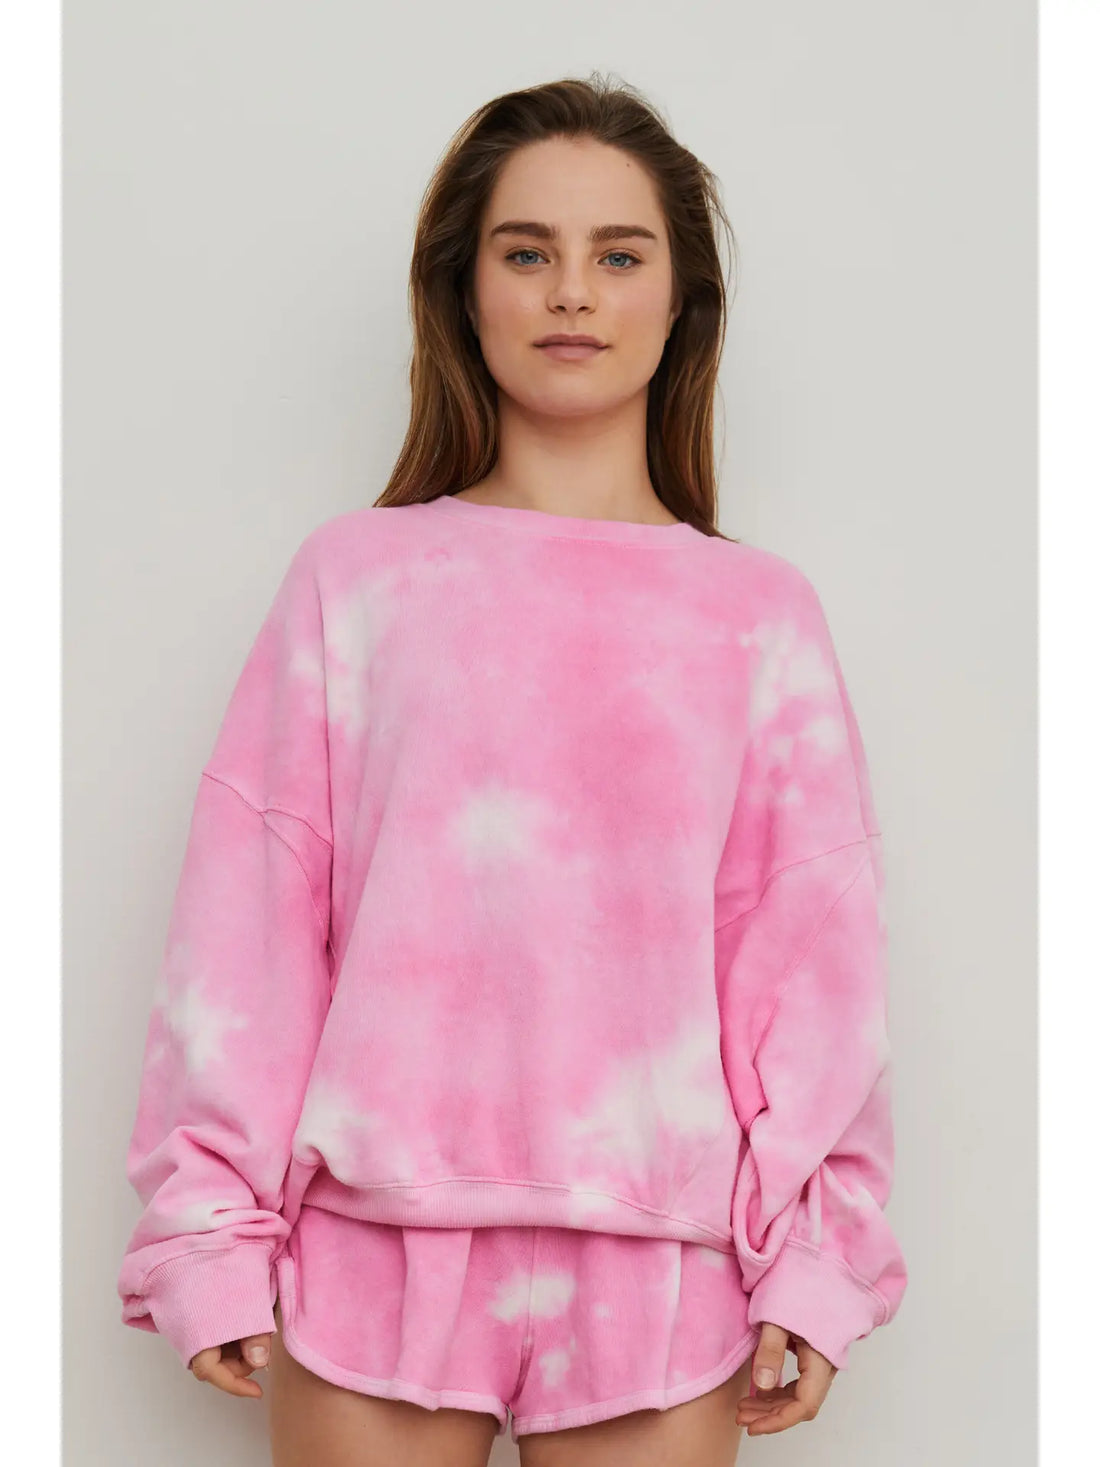 Eco-Chic Women's Organic Cotton Sweatshirt - Premium Sweatshirt Denim from The Blank Lab - Just $45! Shop now at shopthedenimbar